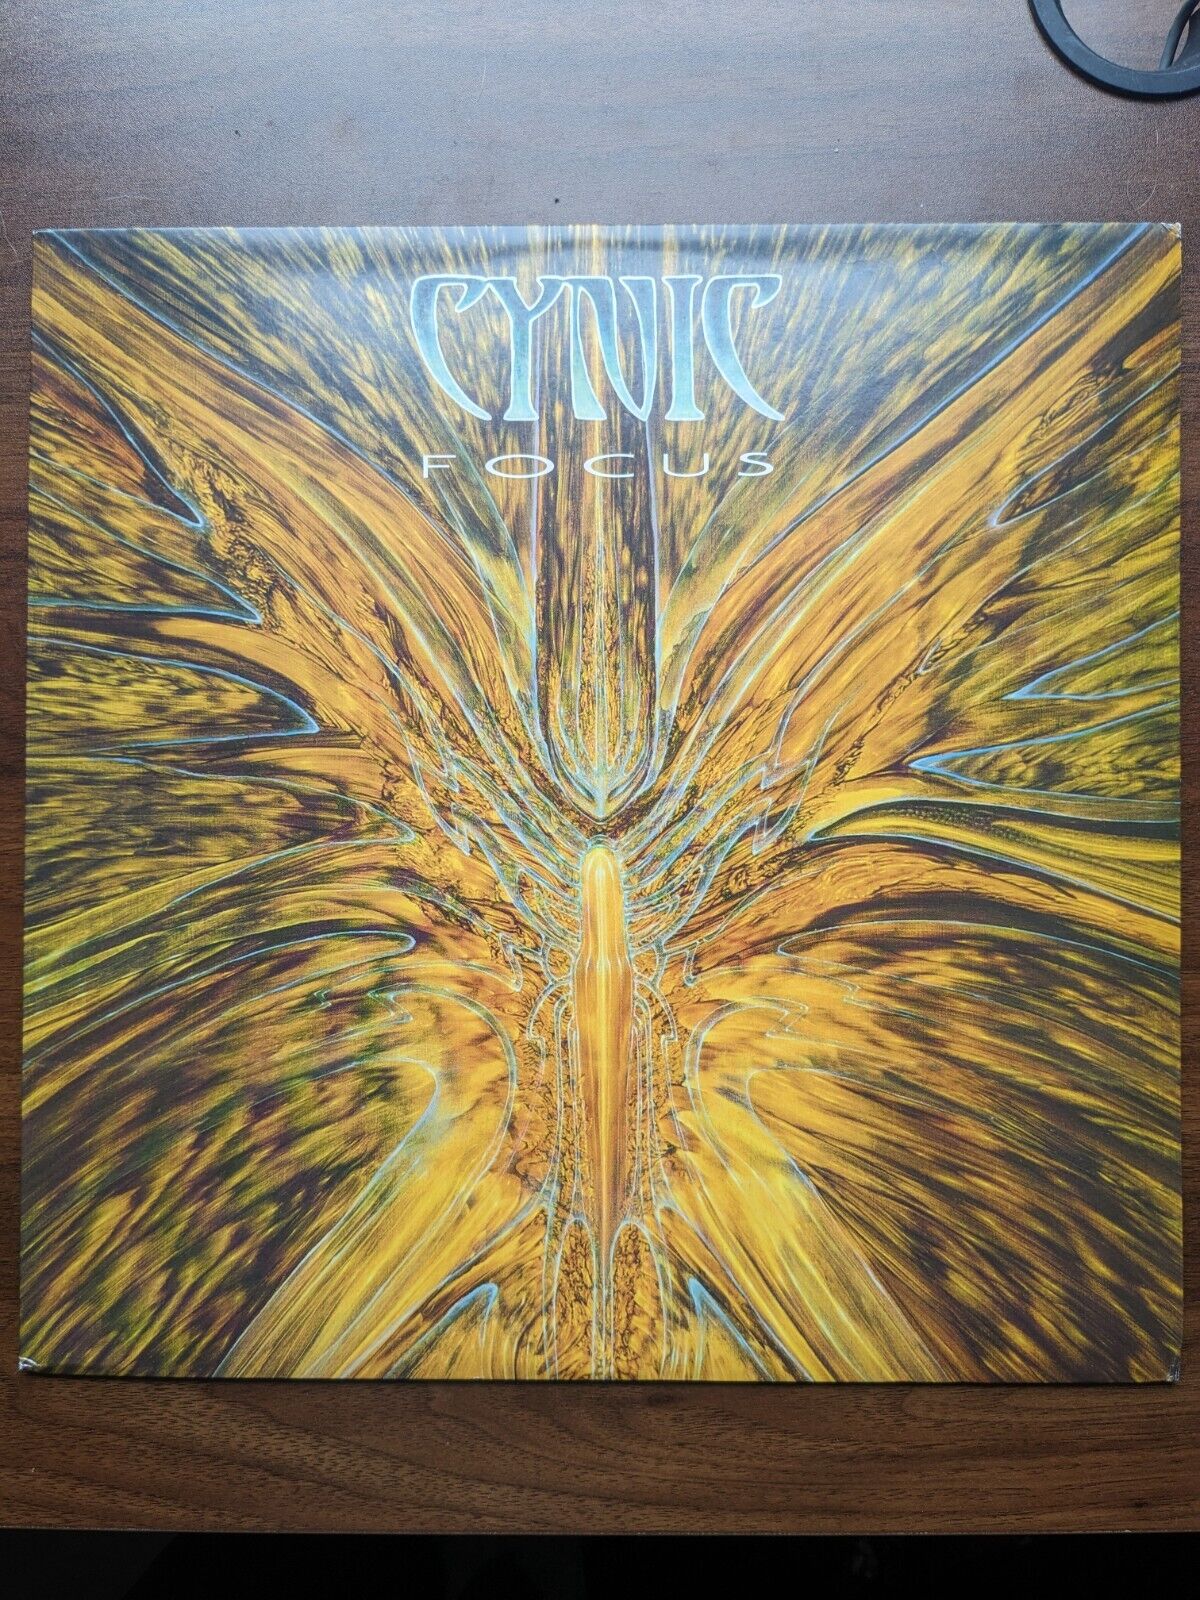 Cynic Focus Orange Vinyl Lp Excellent Condition